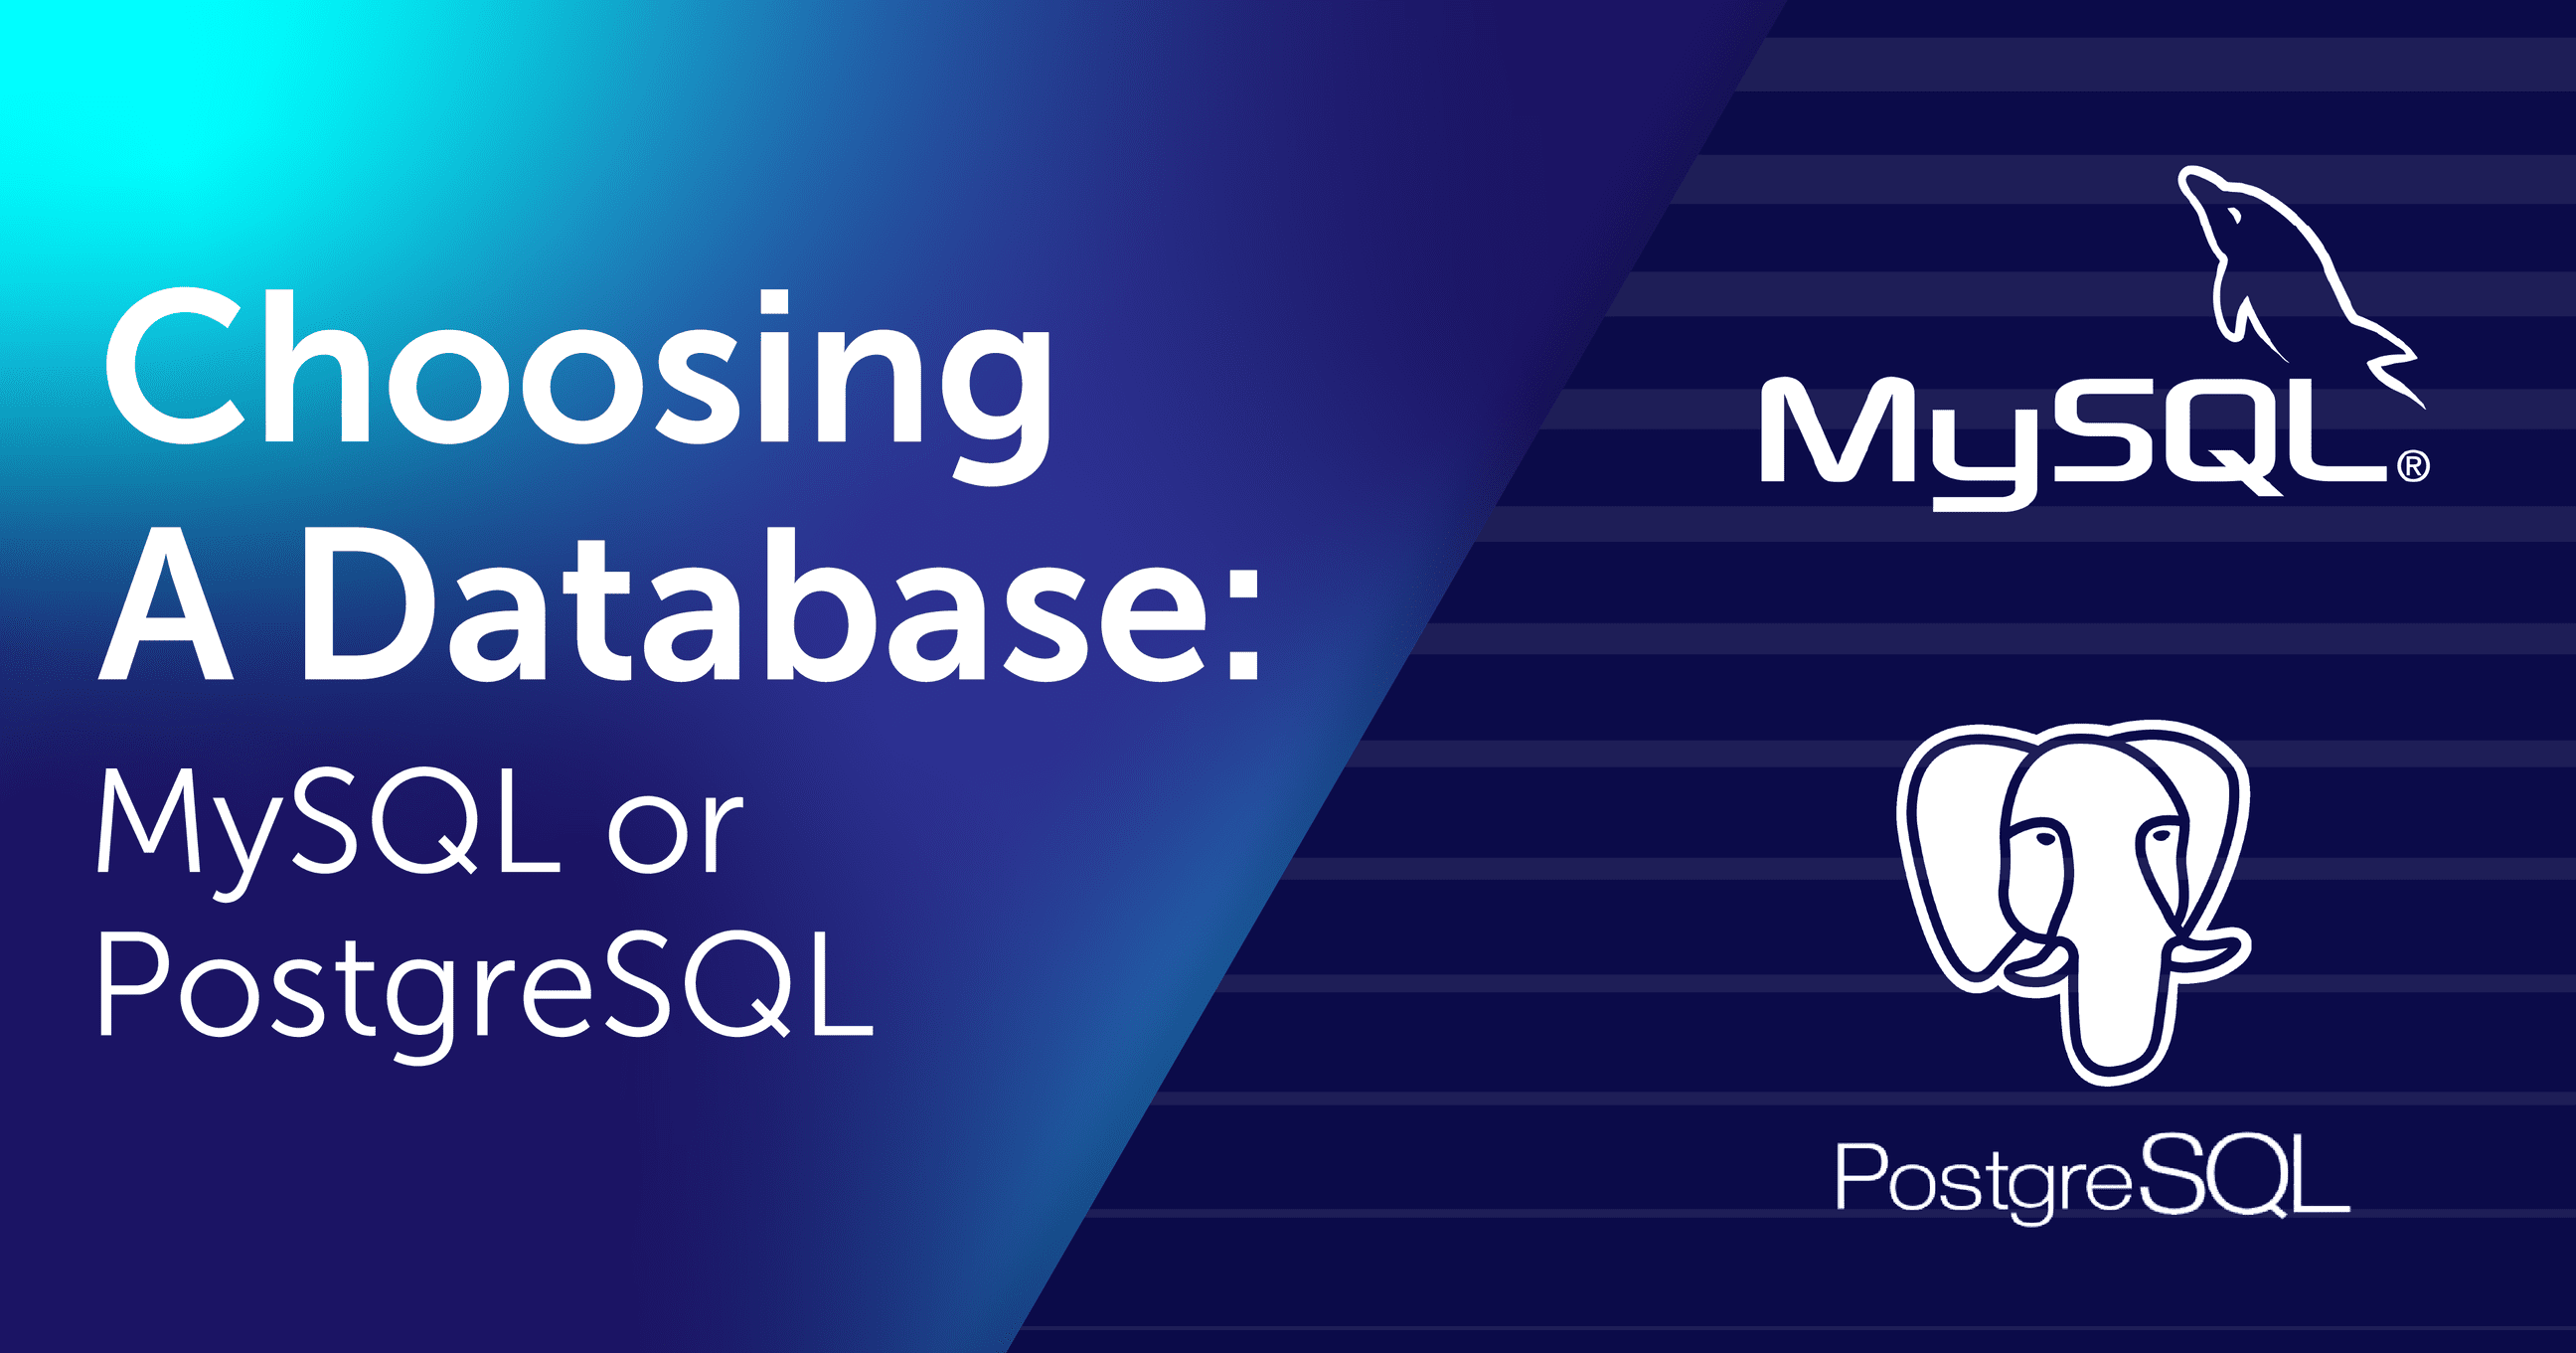 Choosing a Database: MySQL or PostgreSQL